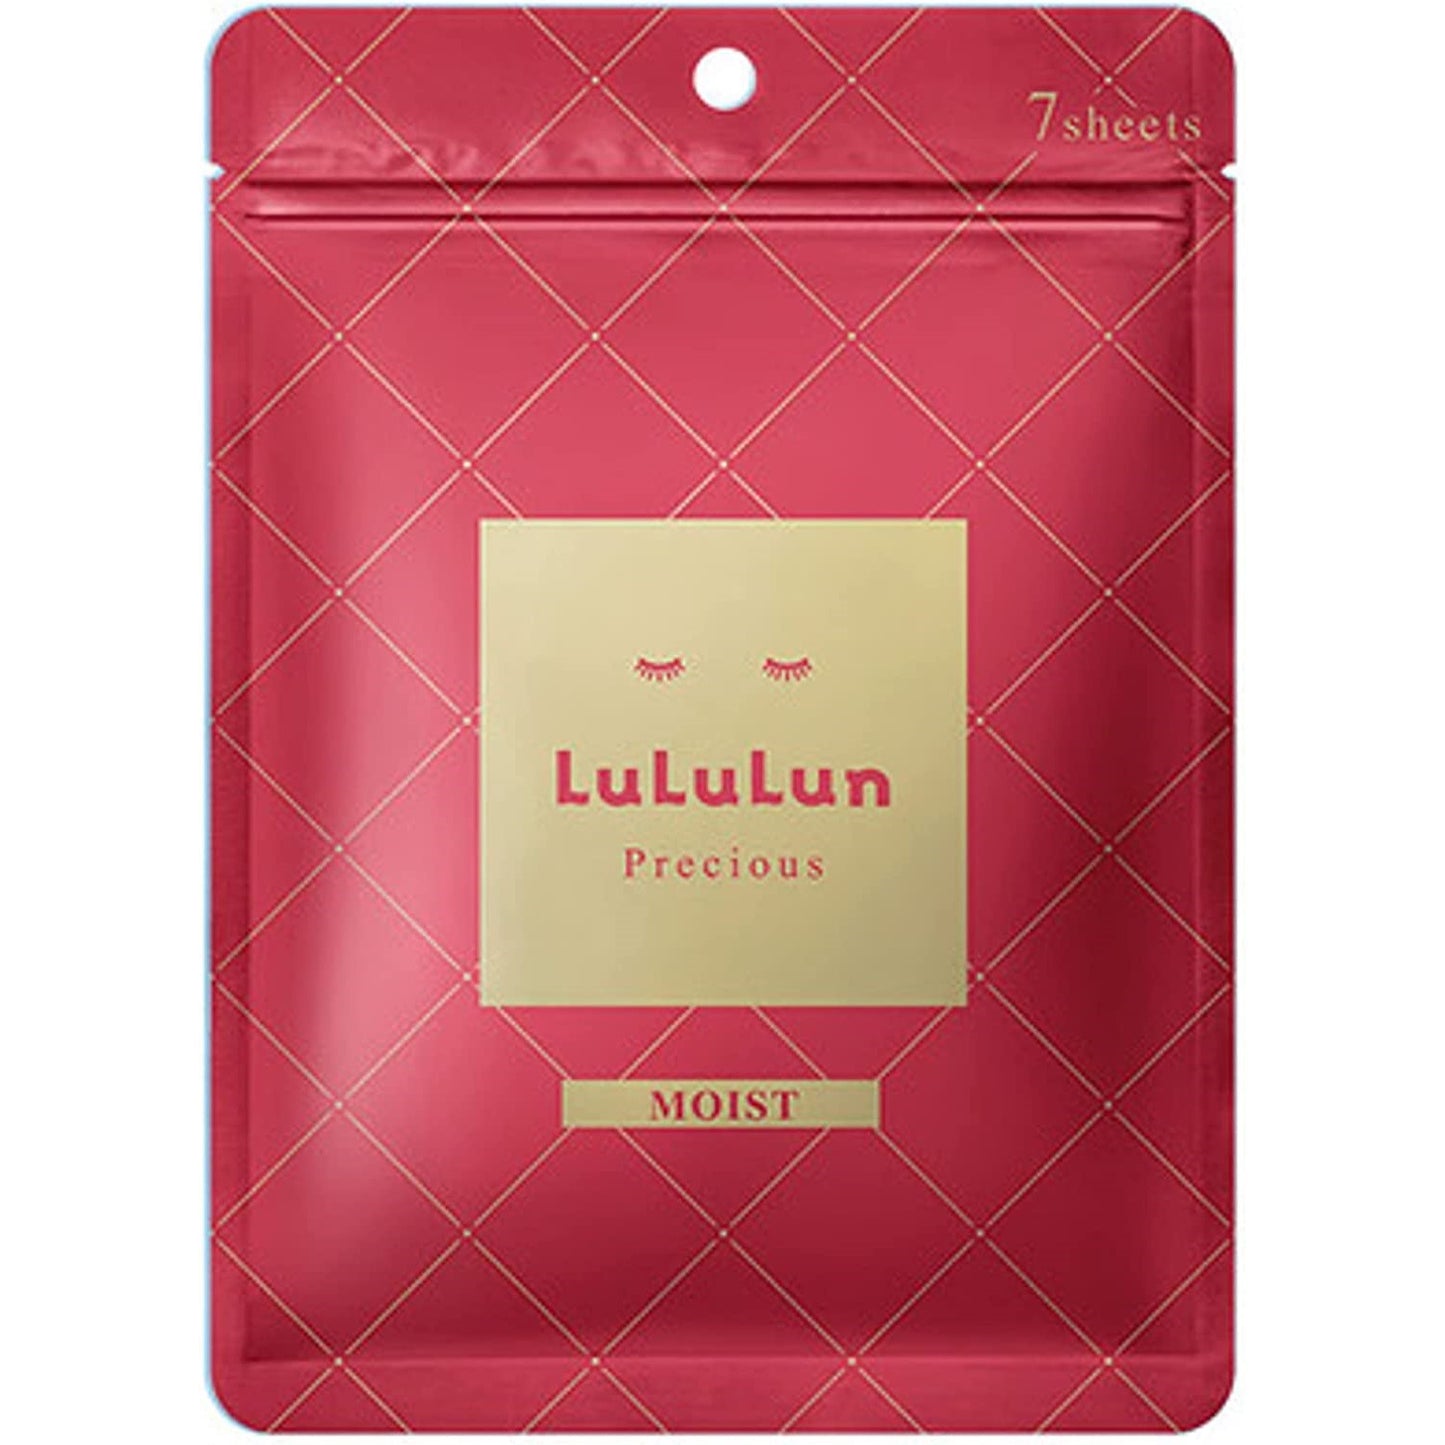 LuLuLun Precious Sheet Mask Moist 7pcs (Made in Japan)